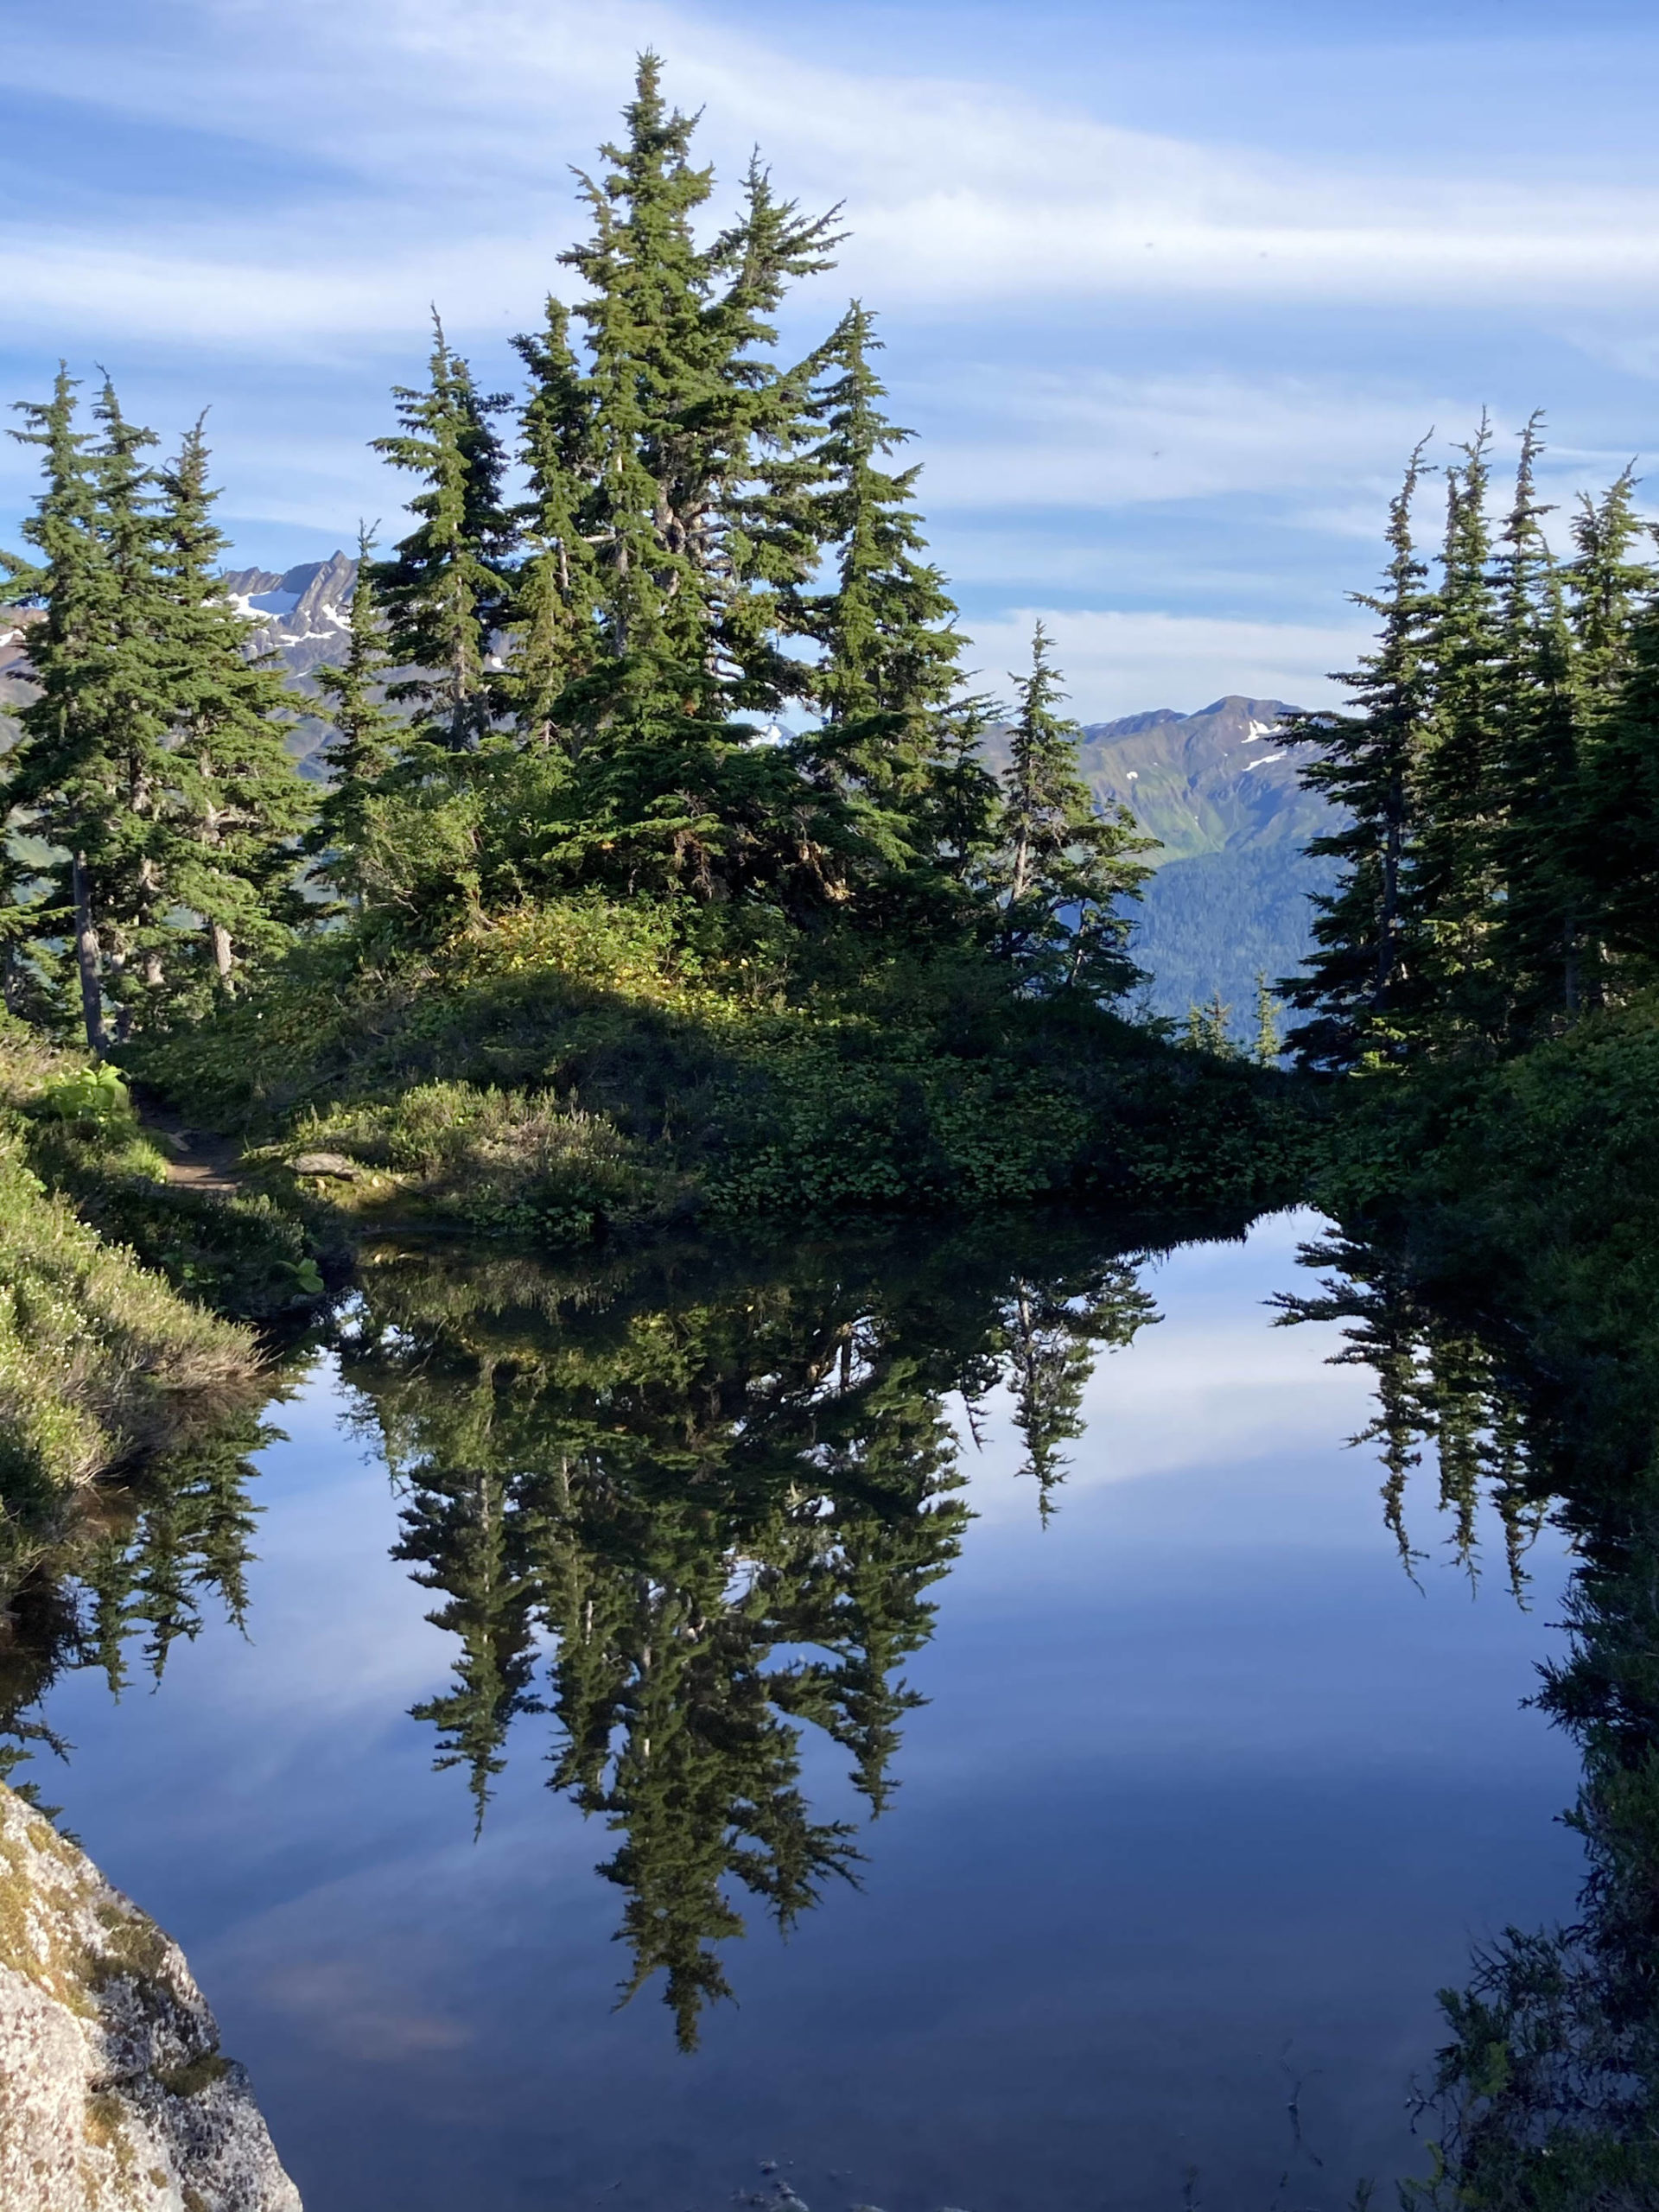 This Sept. 12 photo taken during a hike up Mount McGinnis shows an alpine pond. (Courtesy Photo / Deborah Rudis)